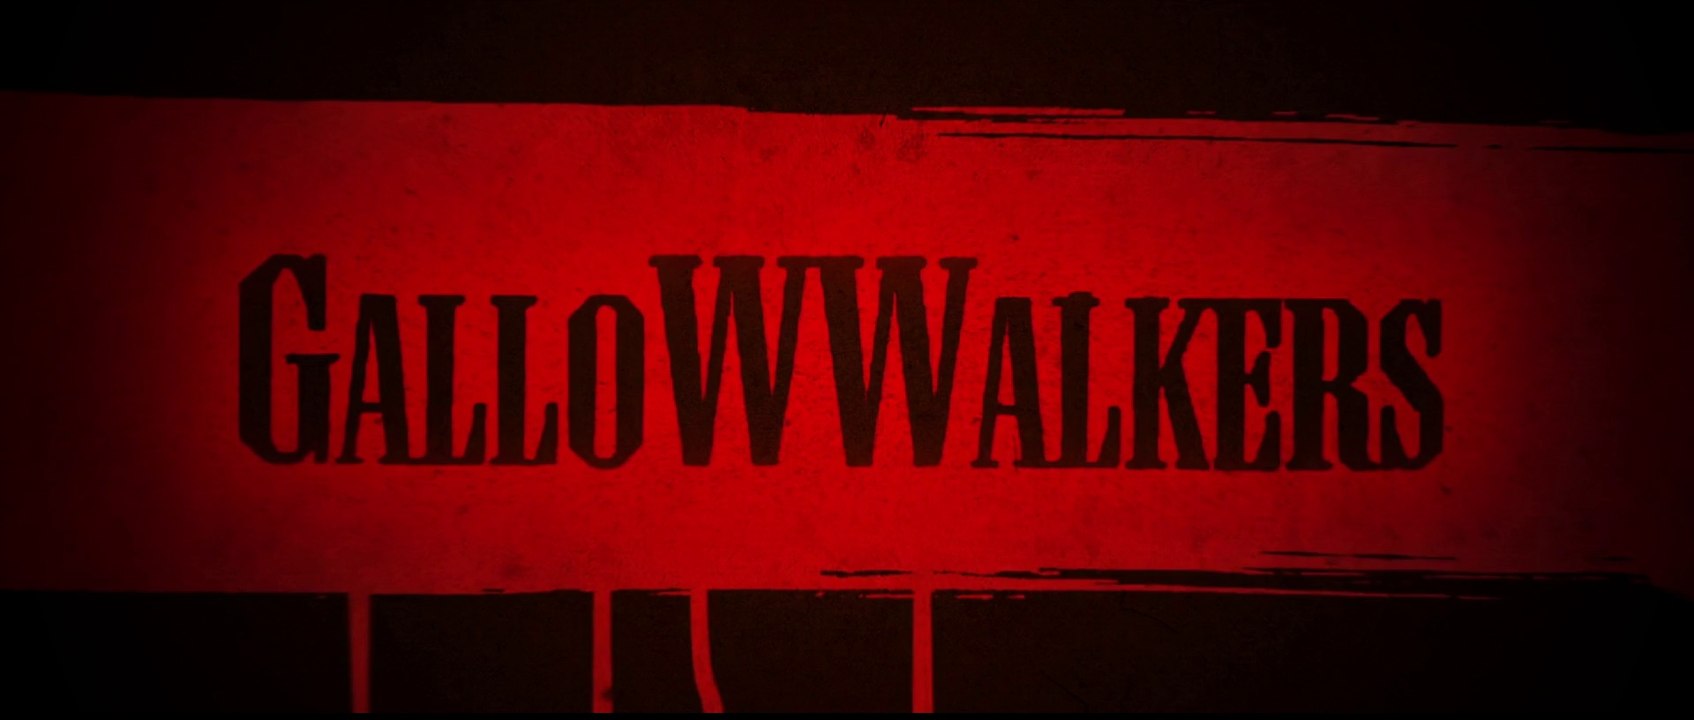 Gallowwalkers (Deutscher Trailer / German Trailer)